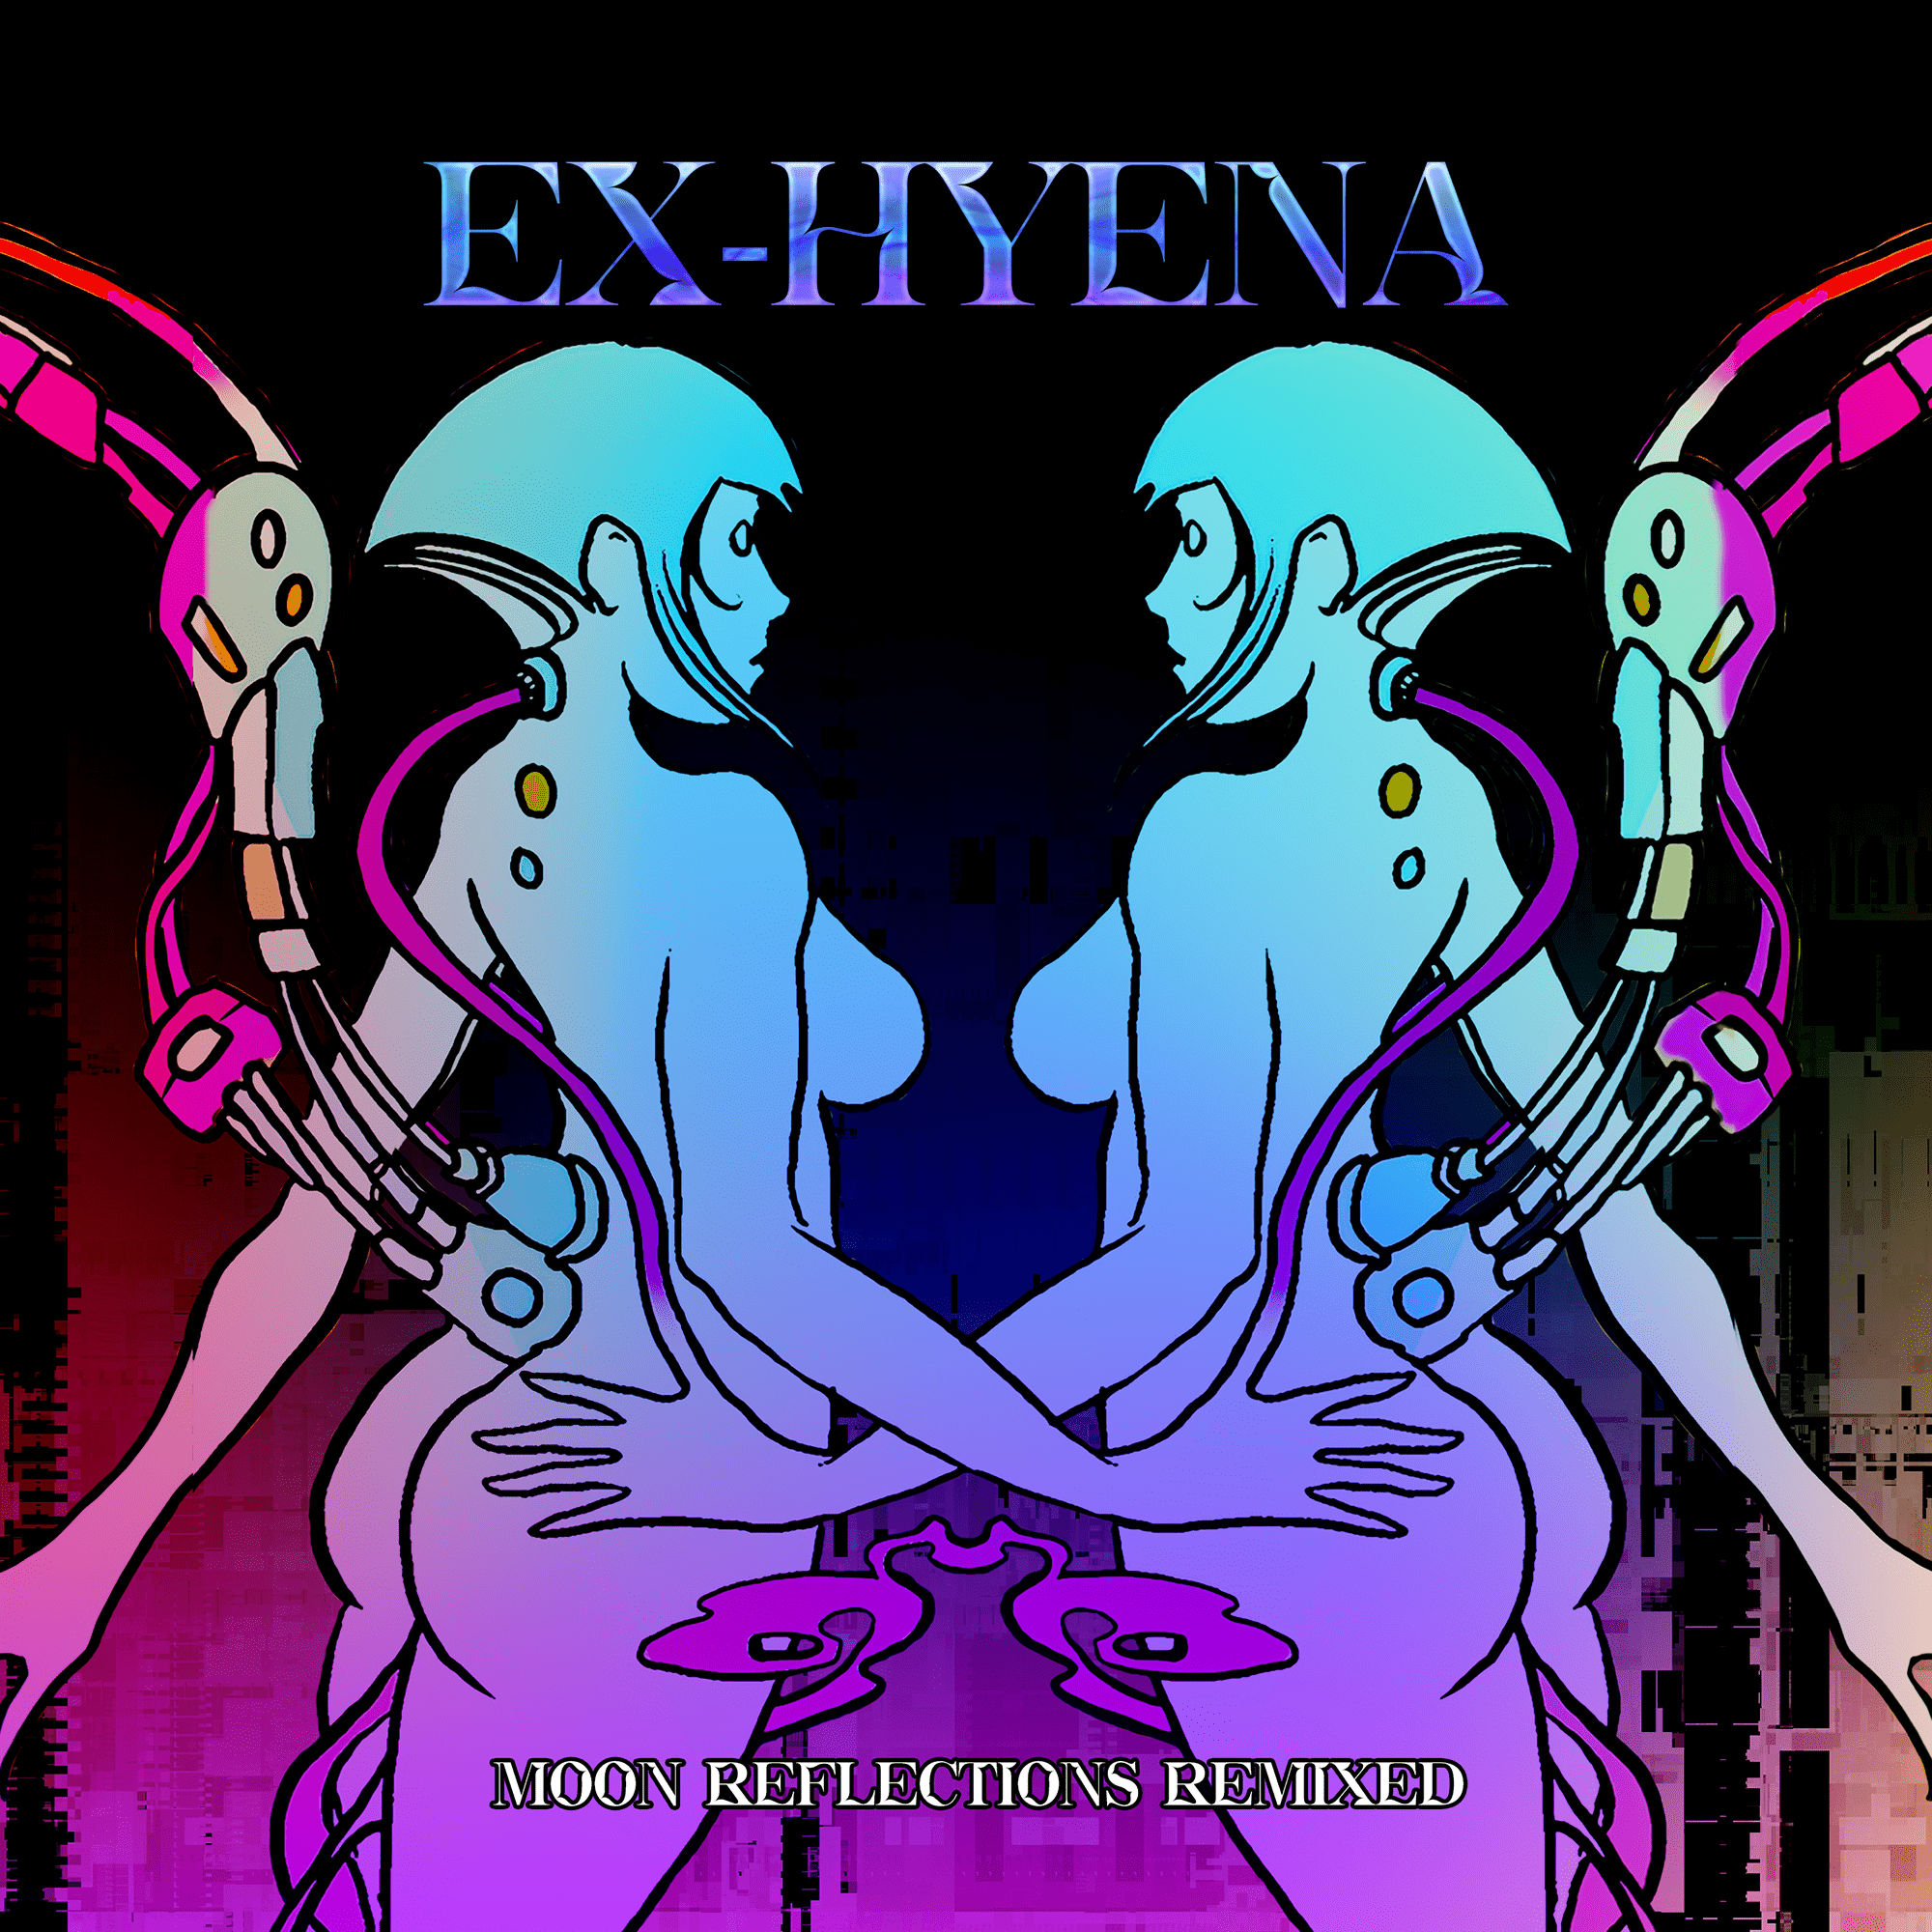 Ex-Hyena’s Moon Reflections Remixed: A Fresh Take on a Classic Album